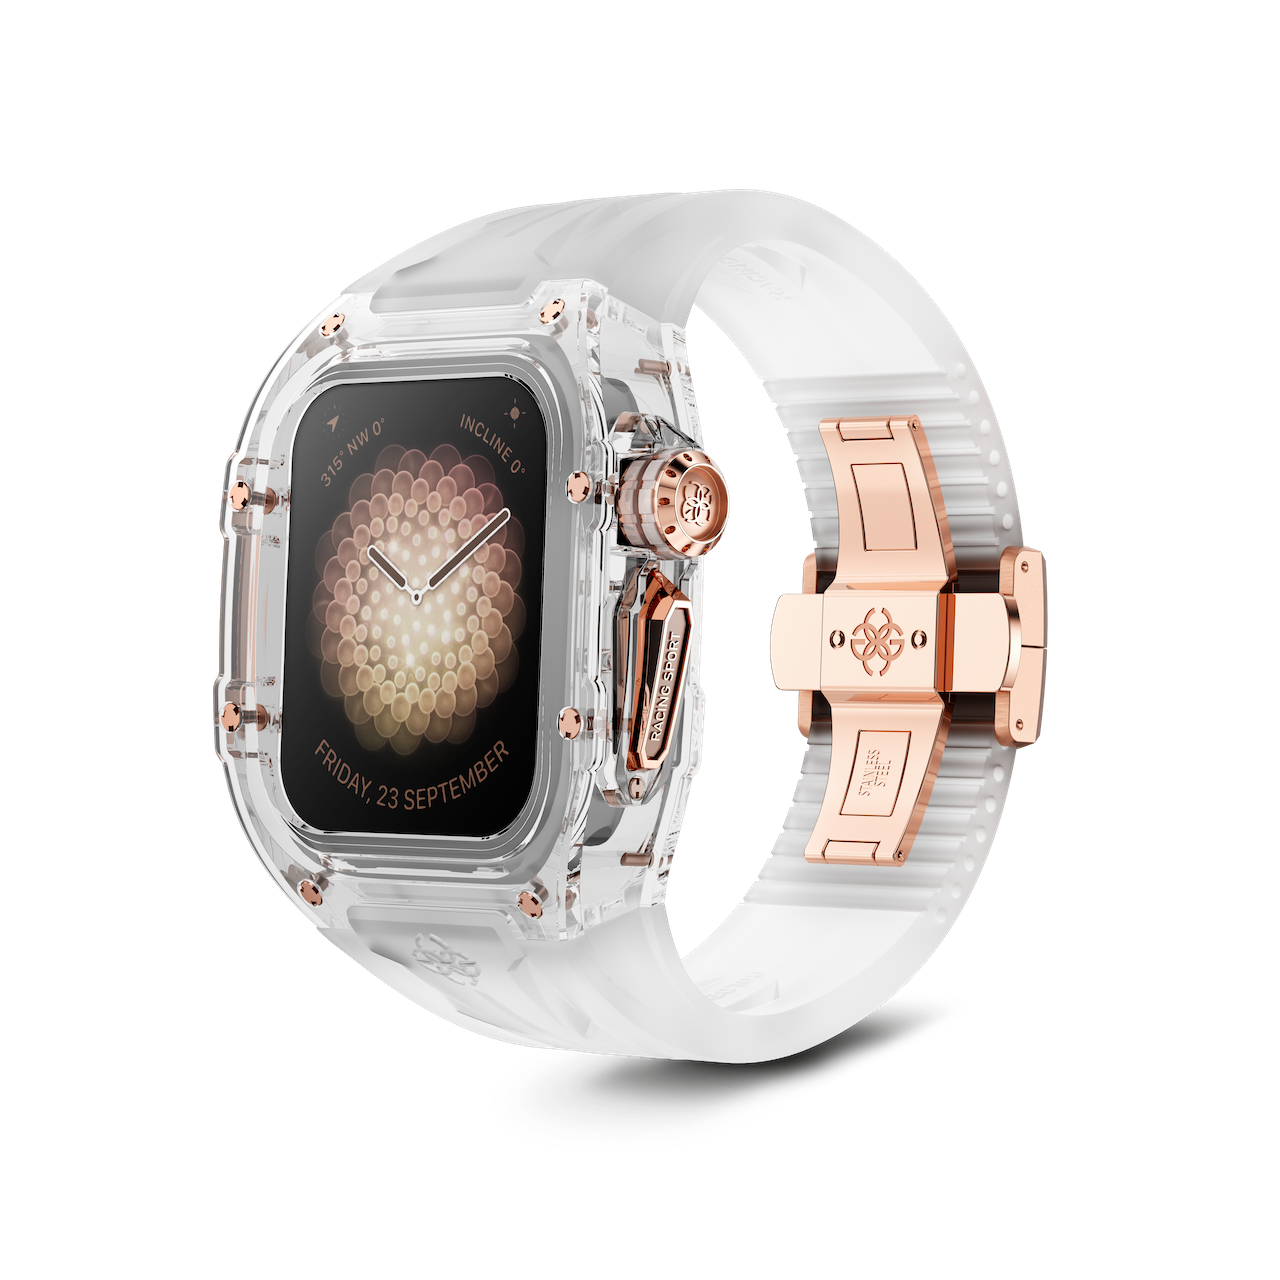 Apple Watch Case - RSTR45 - CRYSTAL ROSE